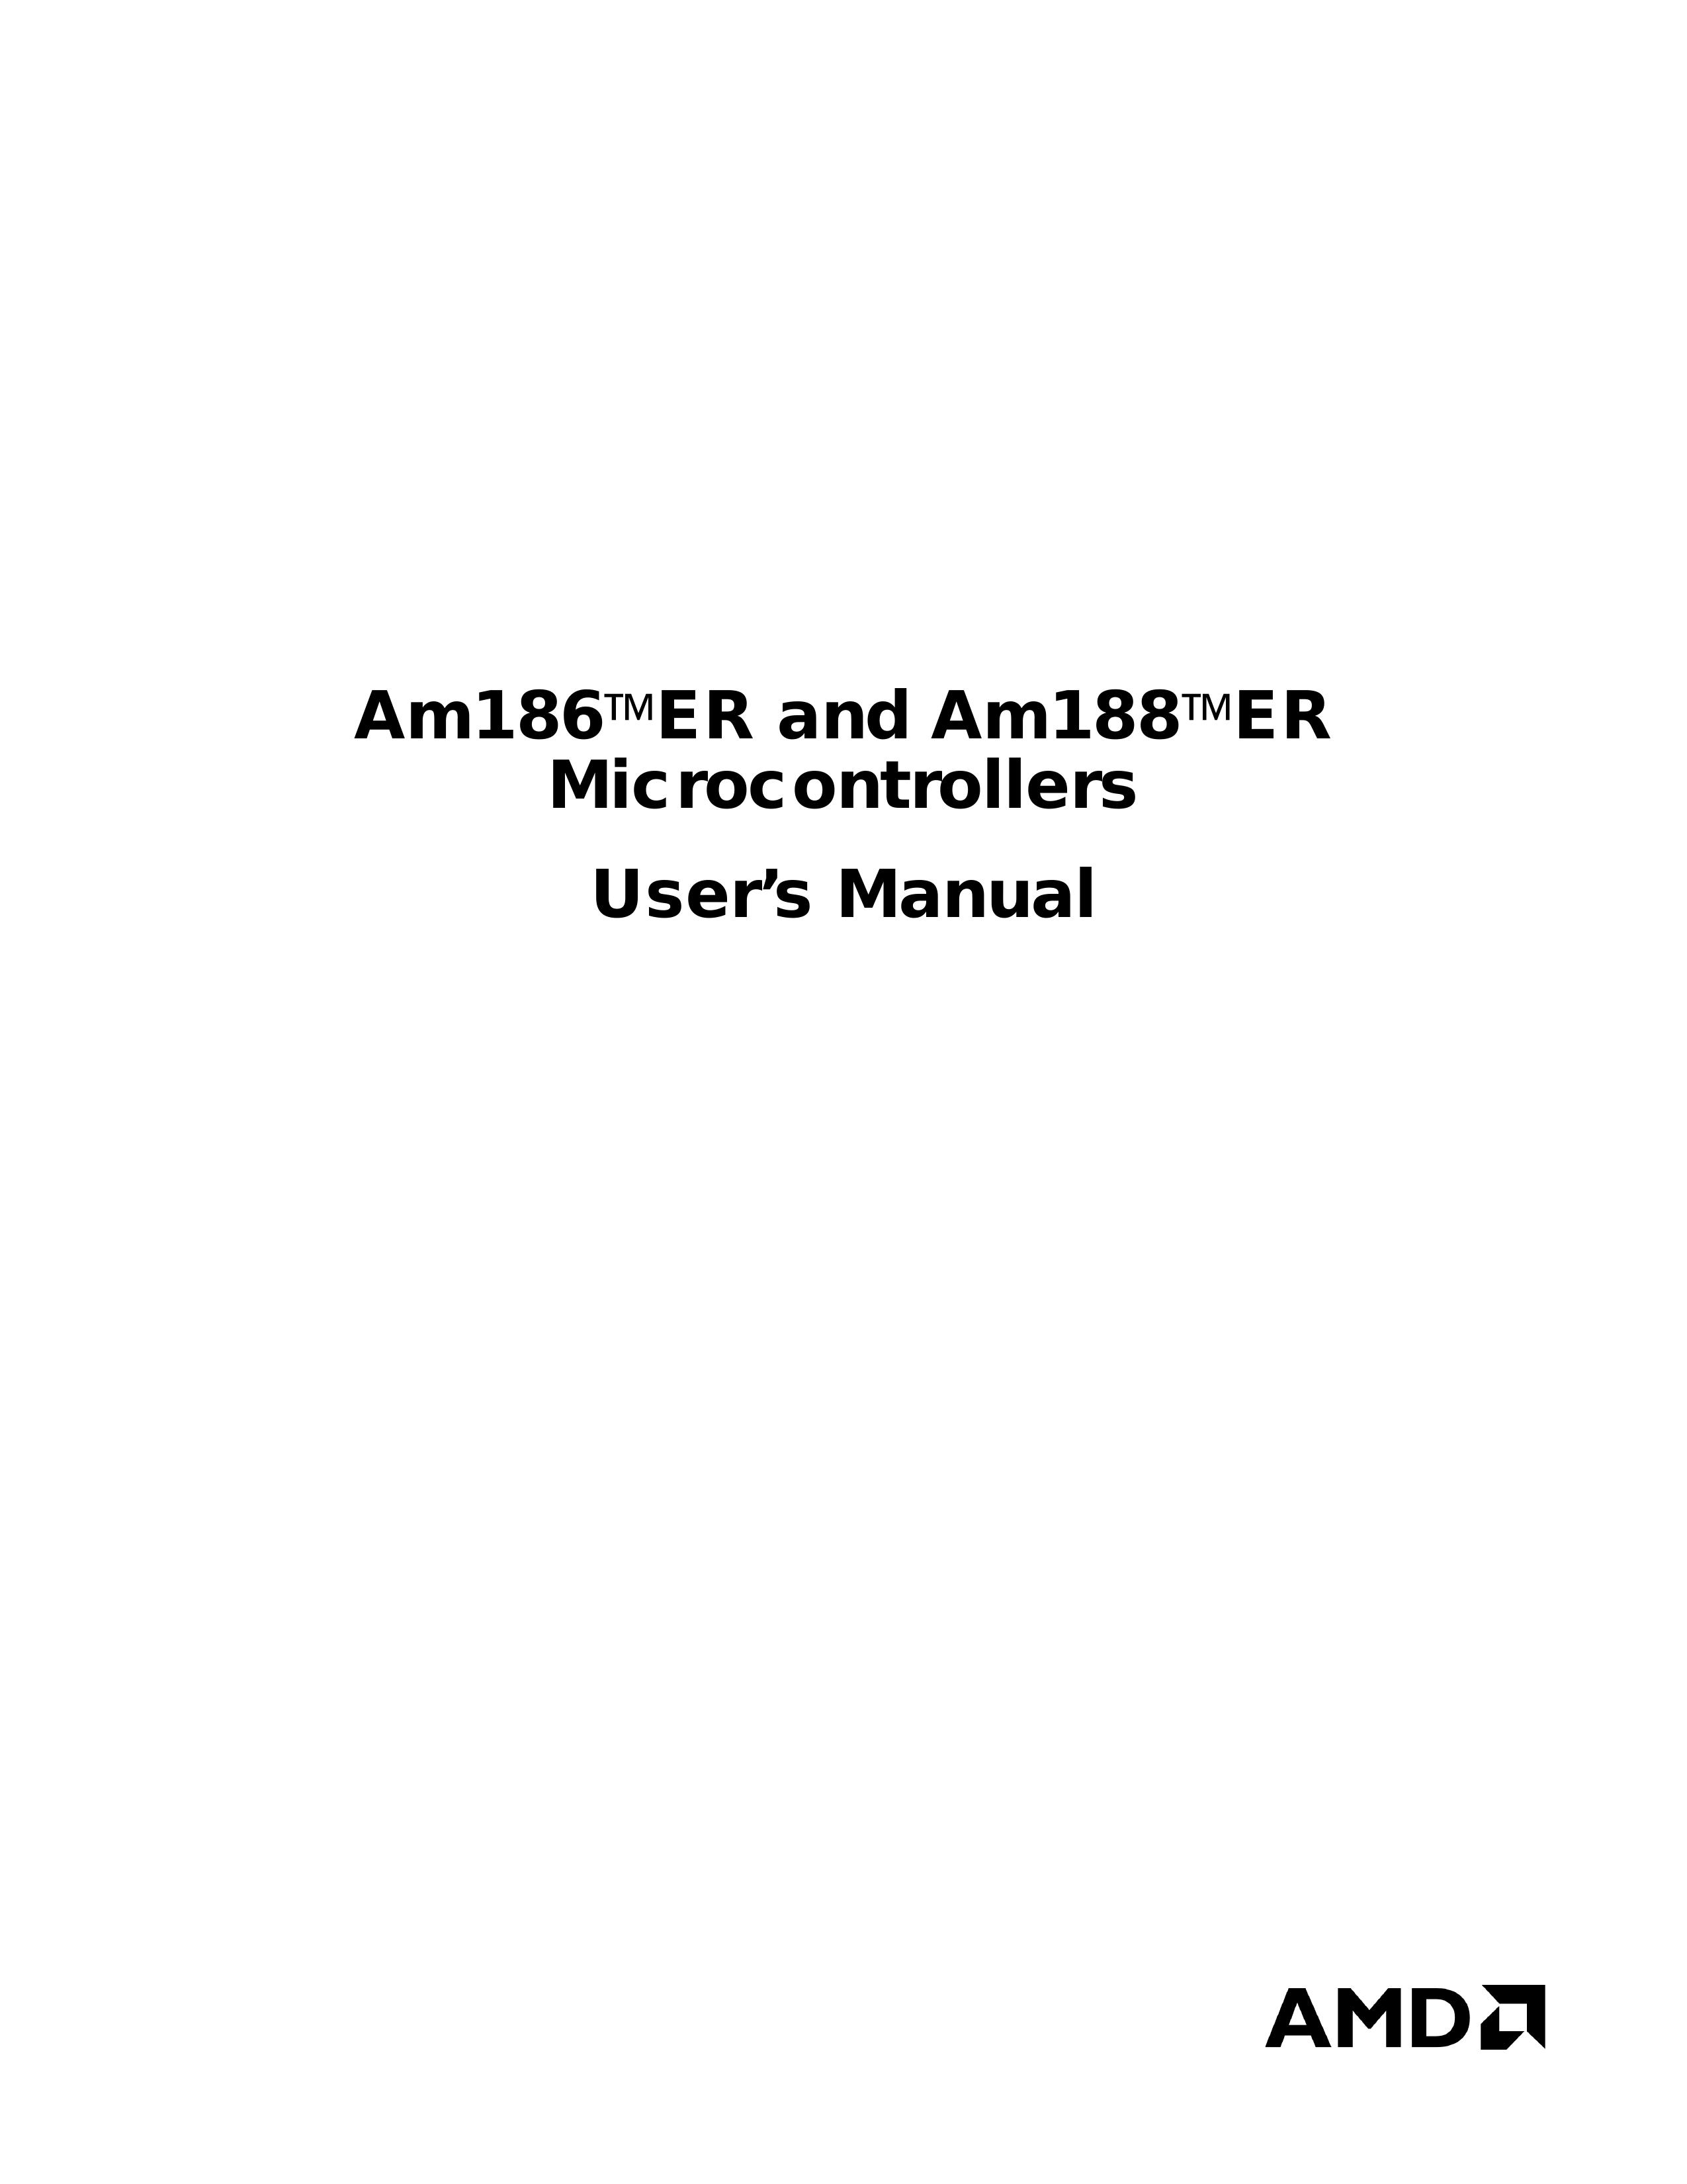 AMD Am188TMER Microscope & Magnifier User Manual